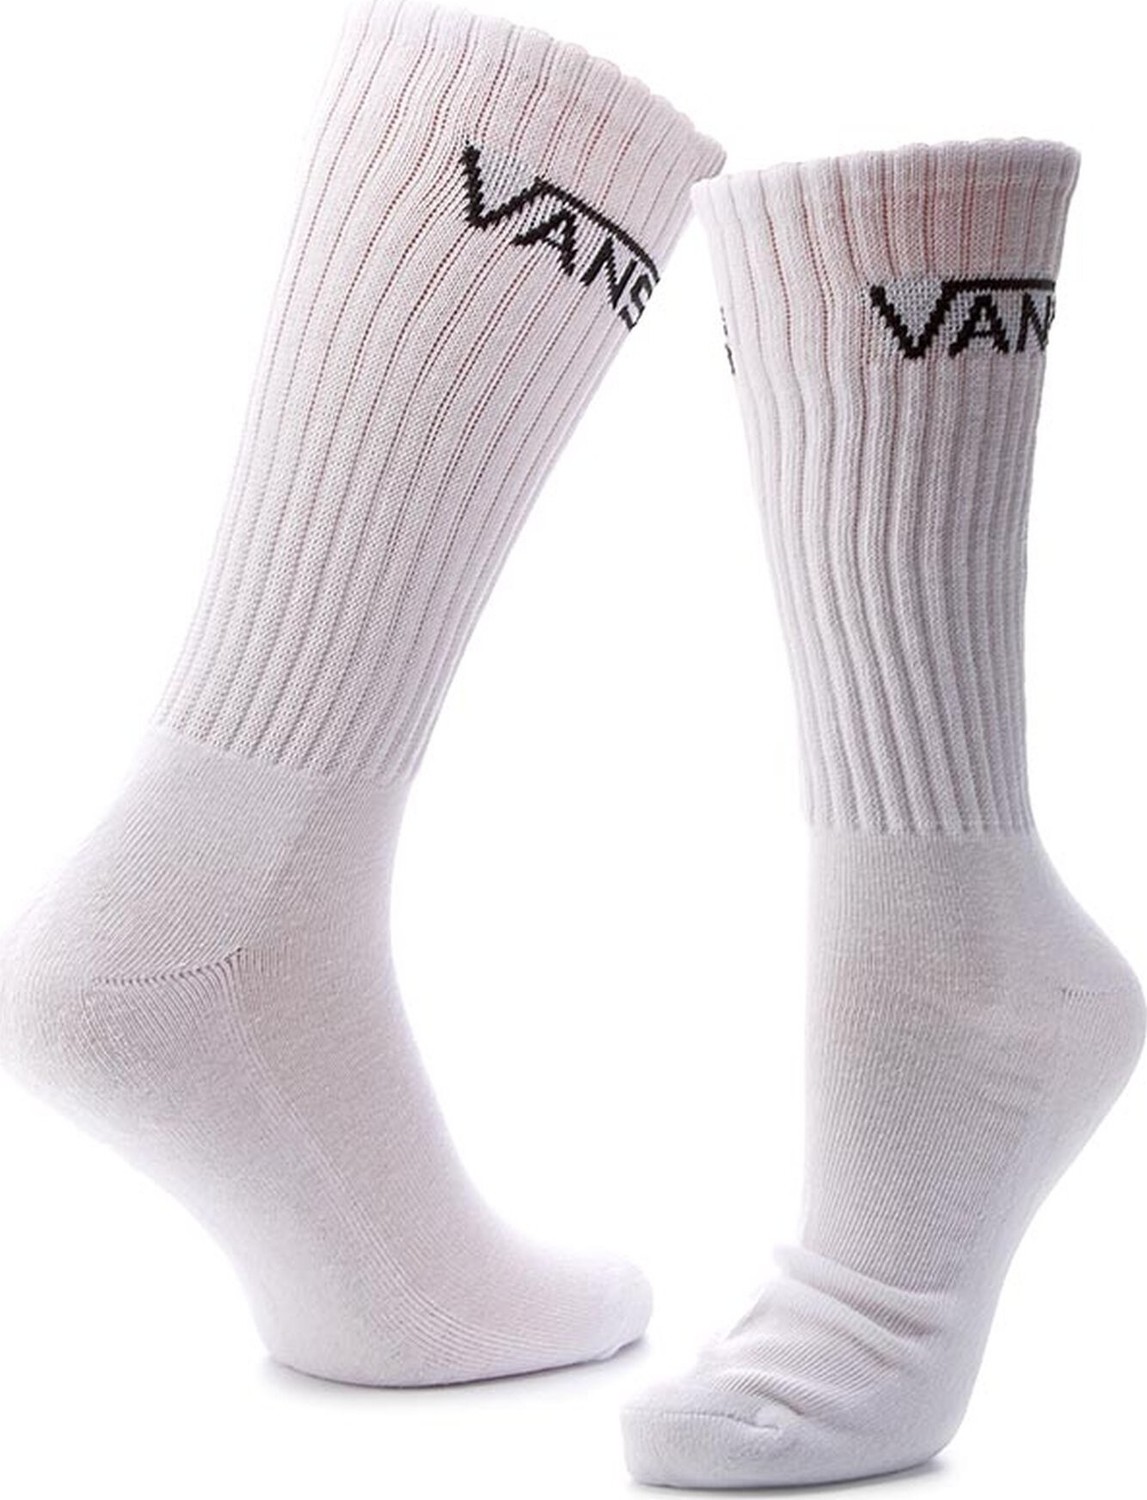 Sada 3 párů pánských vysokých ponožek Vans Mn Classic Crew 9.5 VN000XSEWHT White